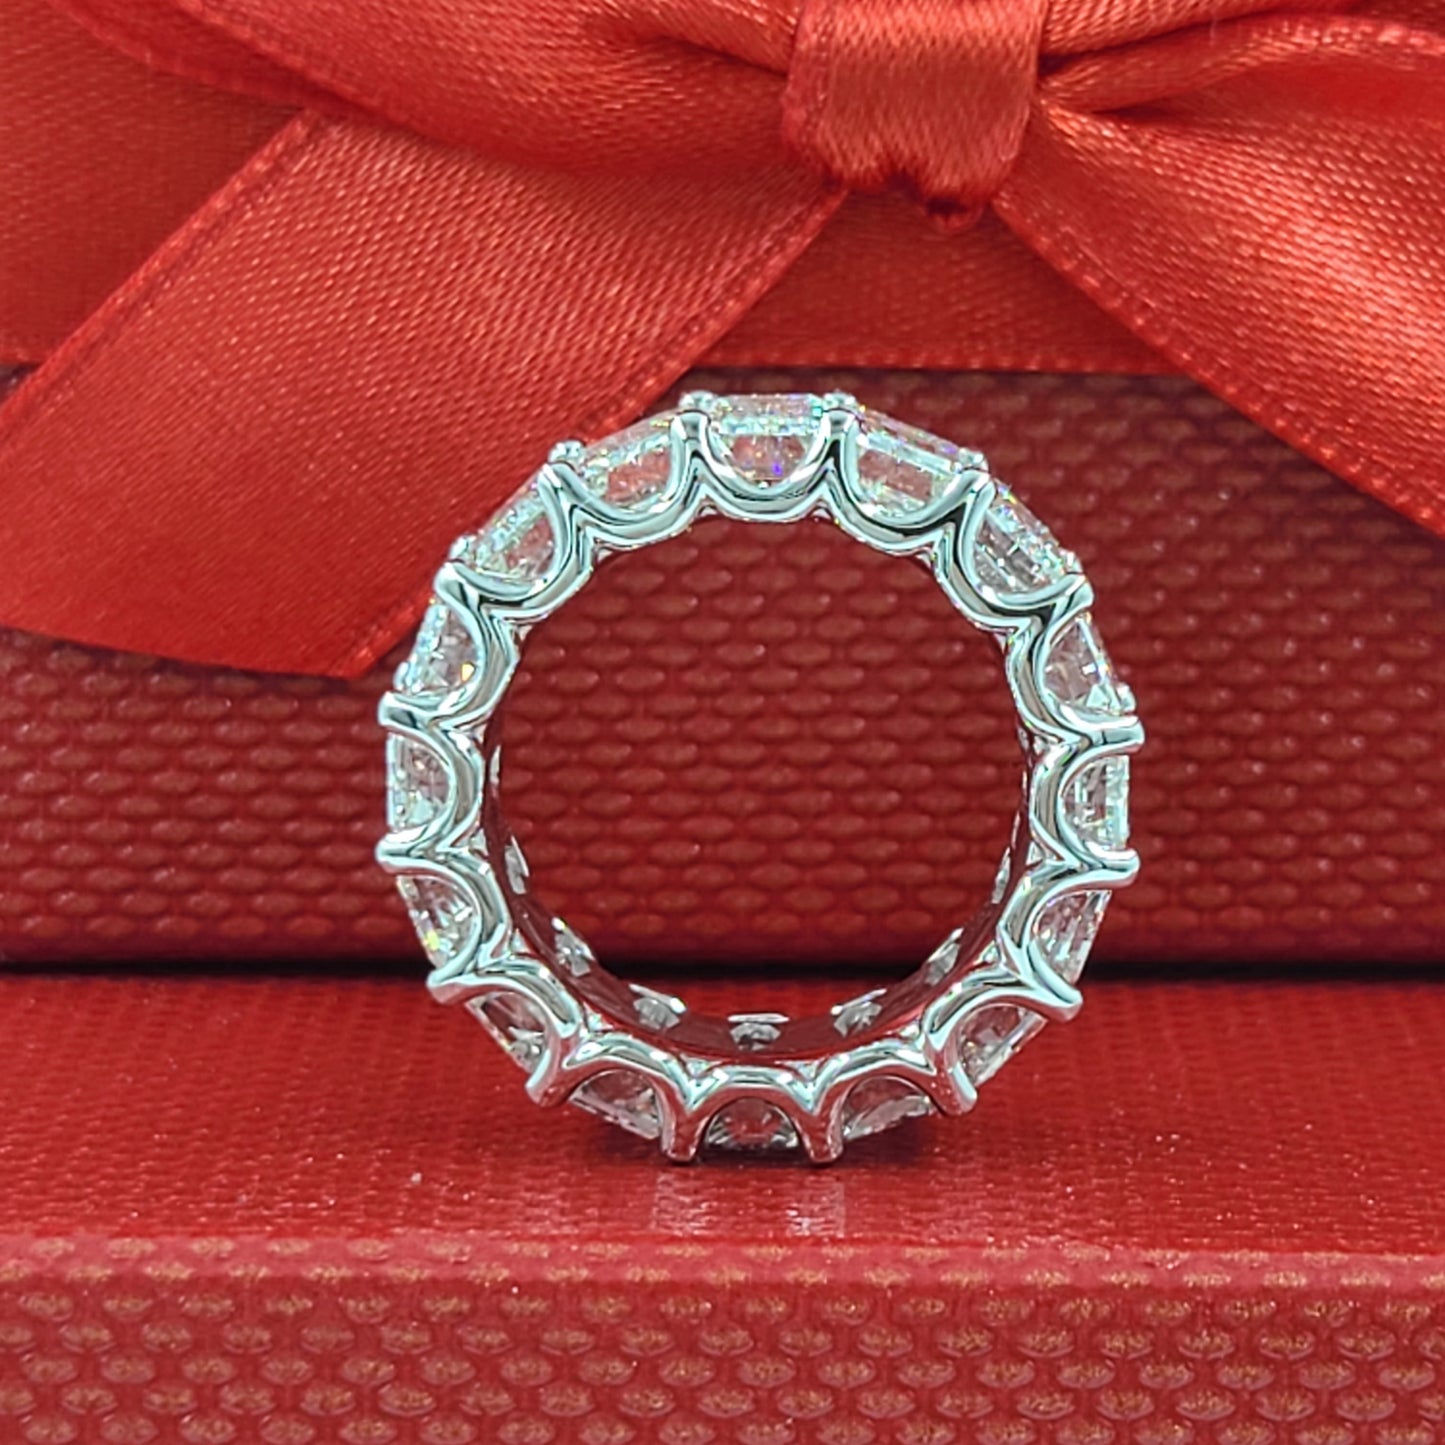 11.8ct Emerald Cut Diamond Ring/Emerald Cut Diamond Wedding Band/Full Eternity Wedding Ring/Natural Diamond/Width 9mm/Anniversary gift